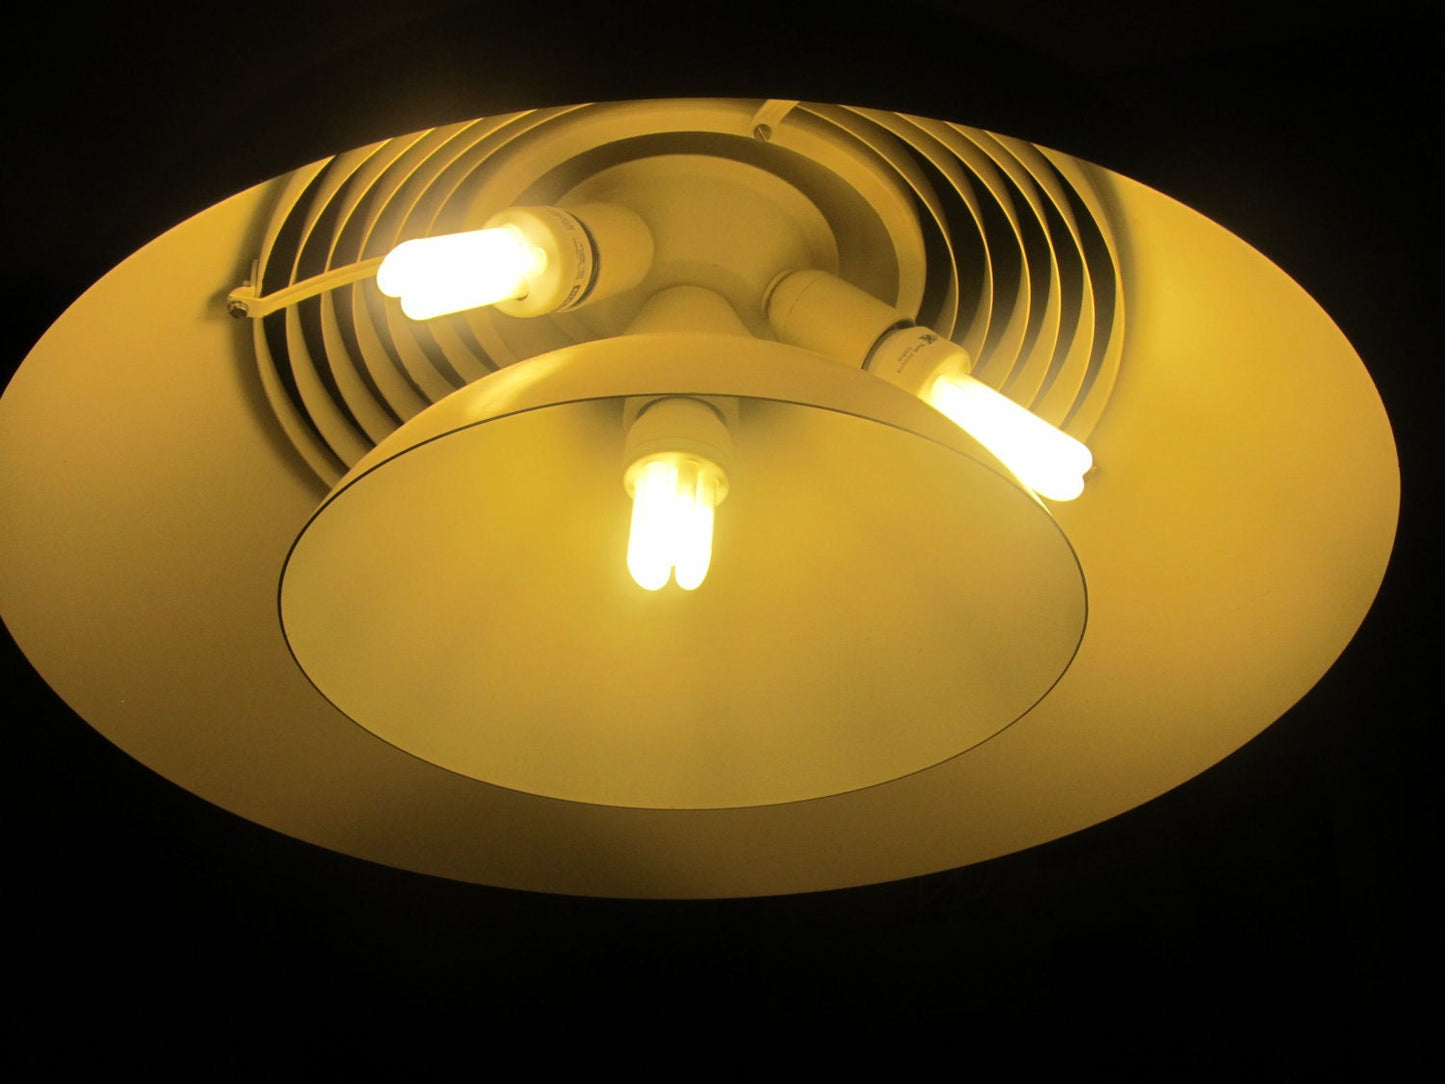 Arne Jacobsen AJ Royal plafondlamp, voor de Scandinavische fabrikant Louis Poulsen, bekend als AJ Royal Pendel